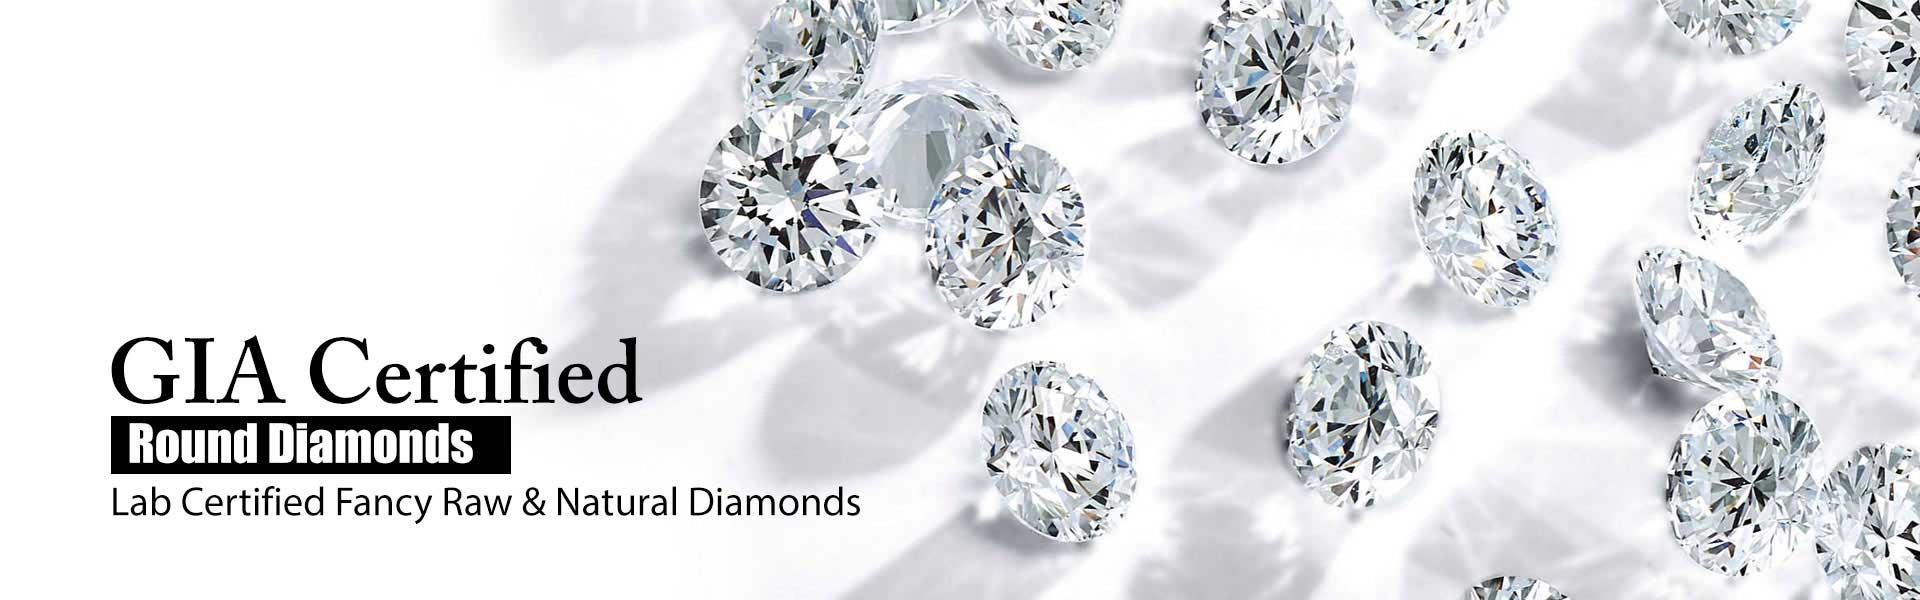  Certified Diamond  Manufacturers in Geneva